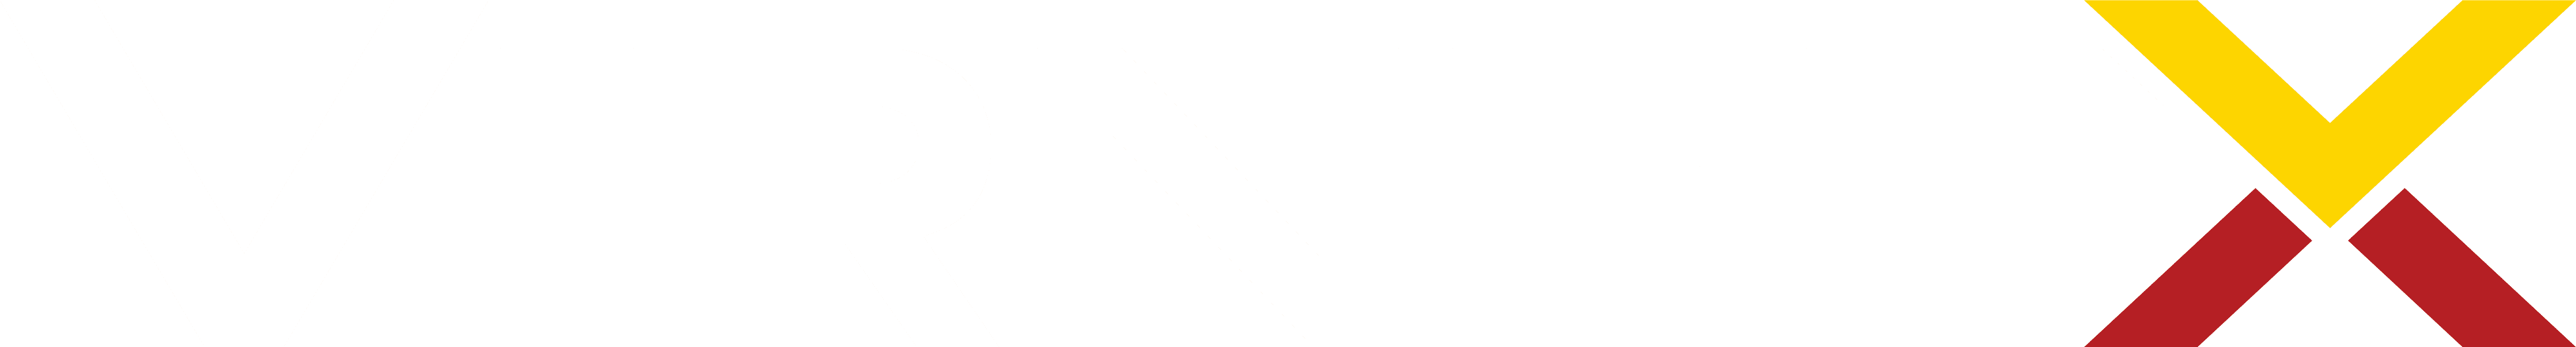 VirnetX white logo